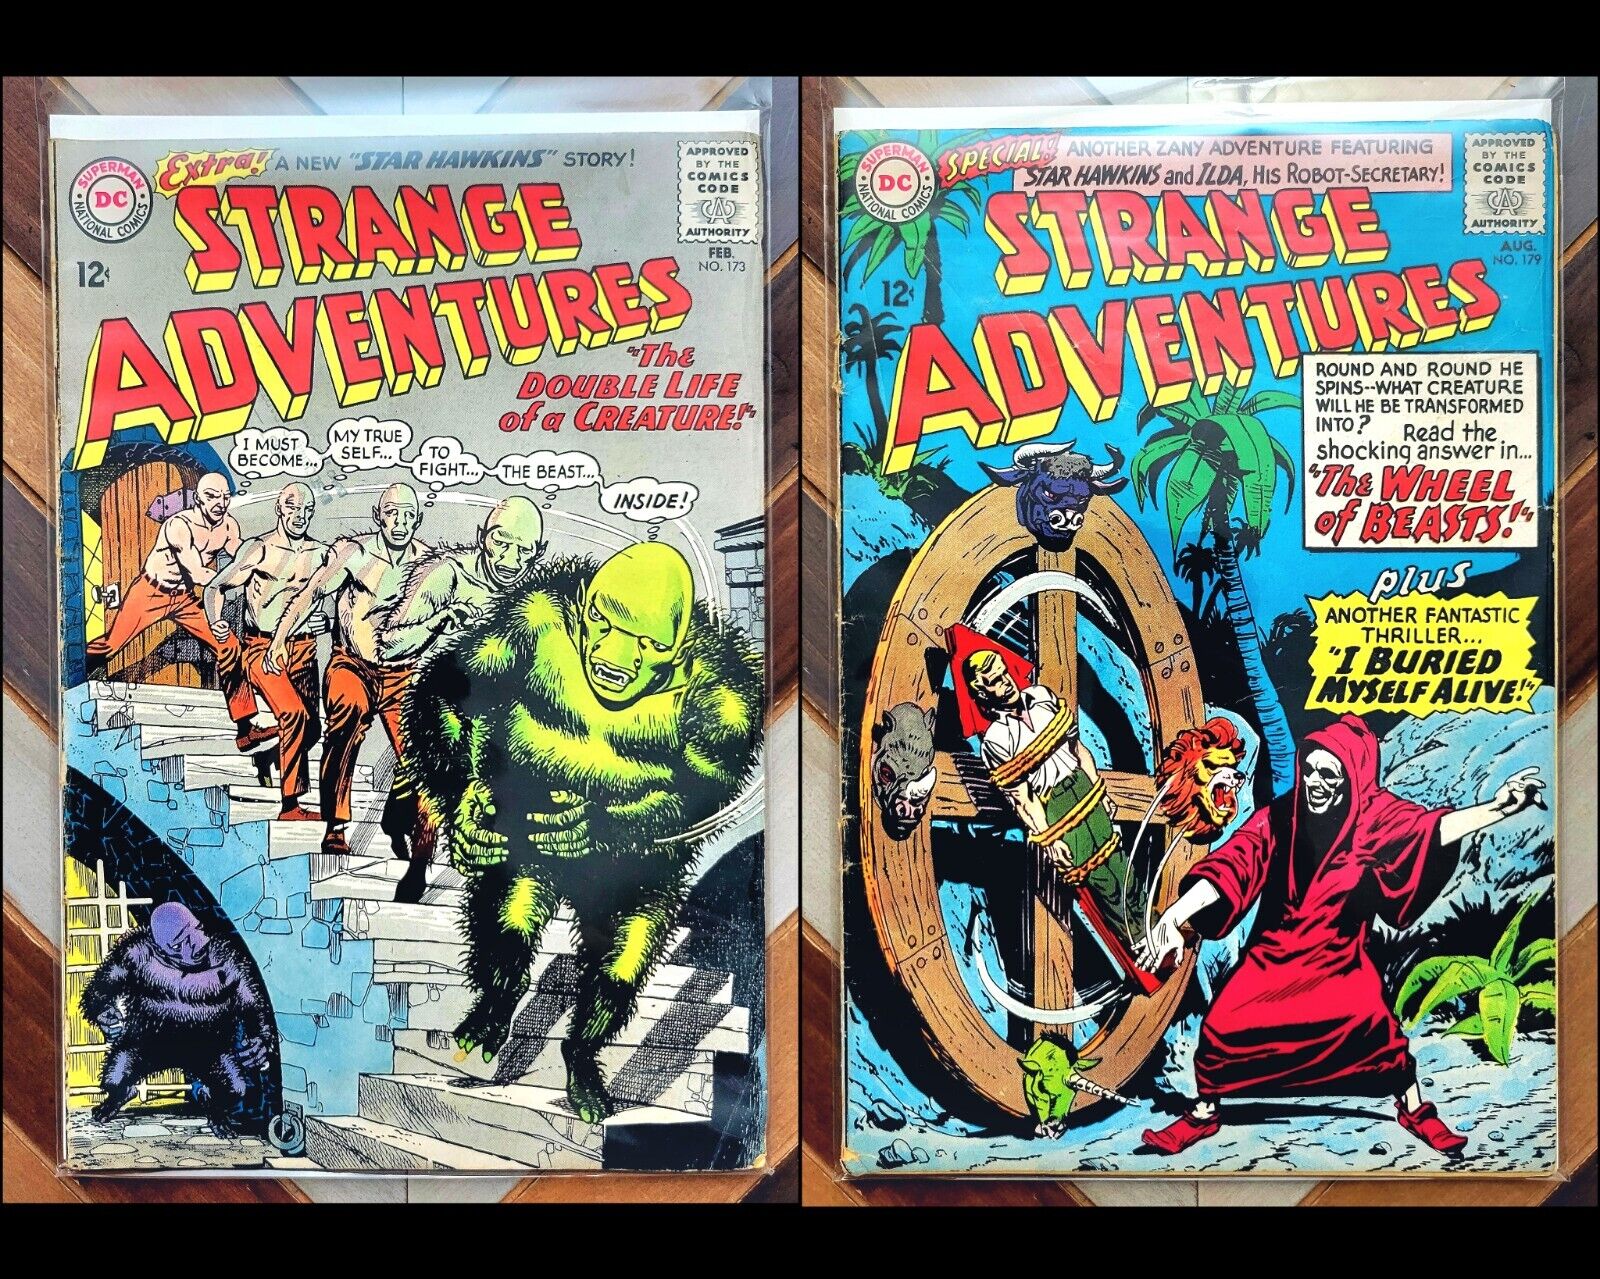 STRANGE ADVENTURES #173 & 179 (DC 1965) Silver Age STAR HAWKINS GIL KANE Covers